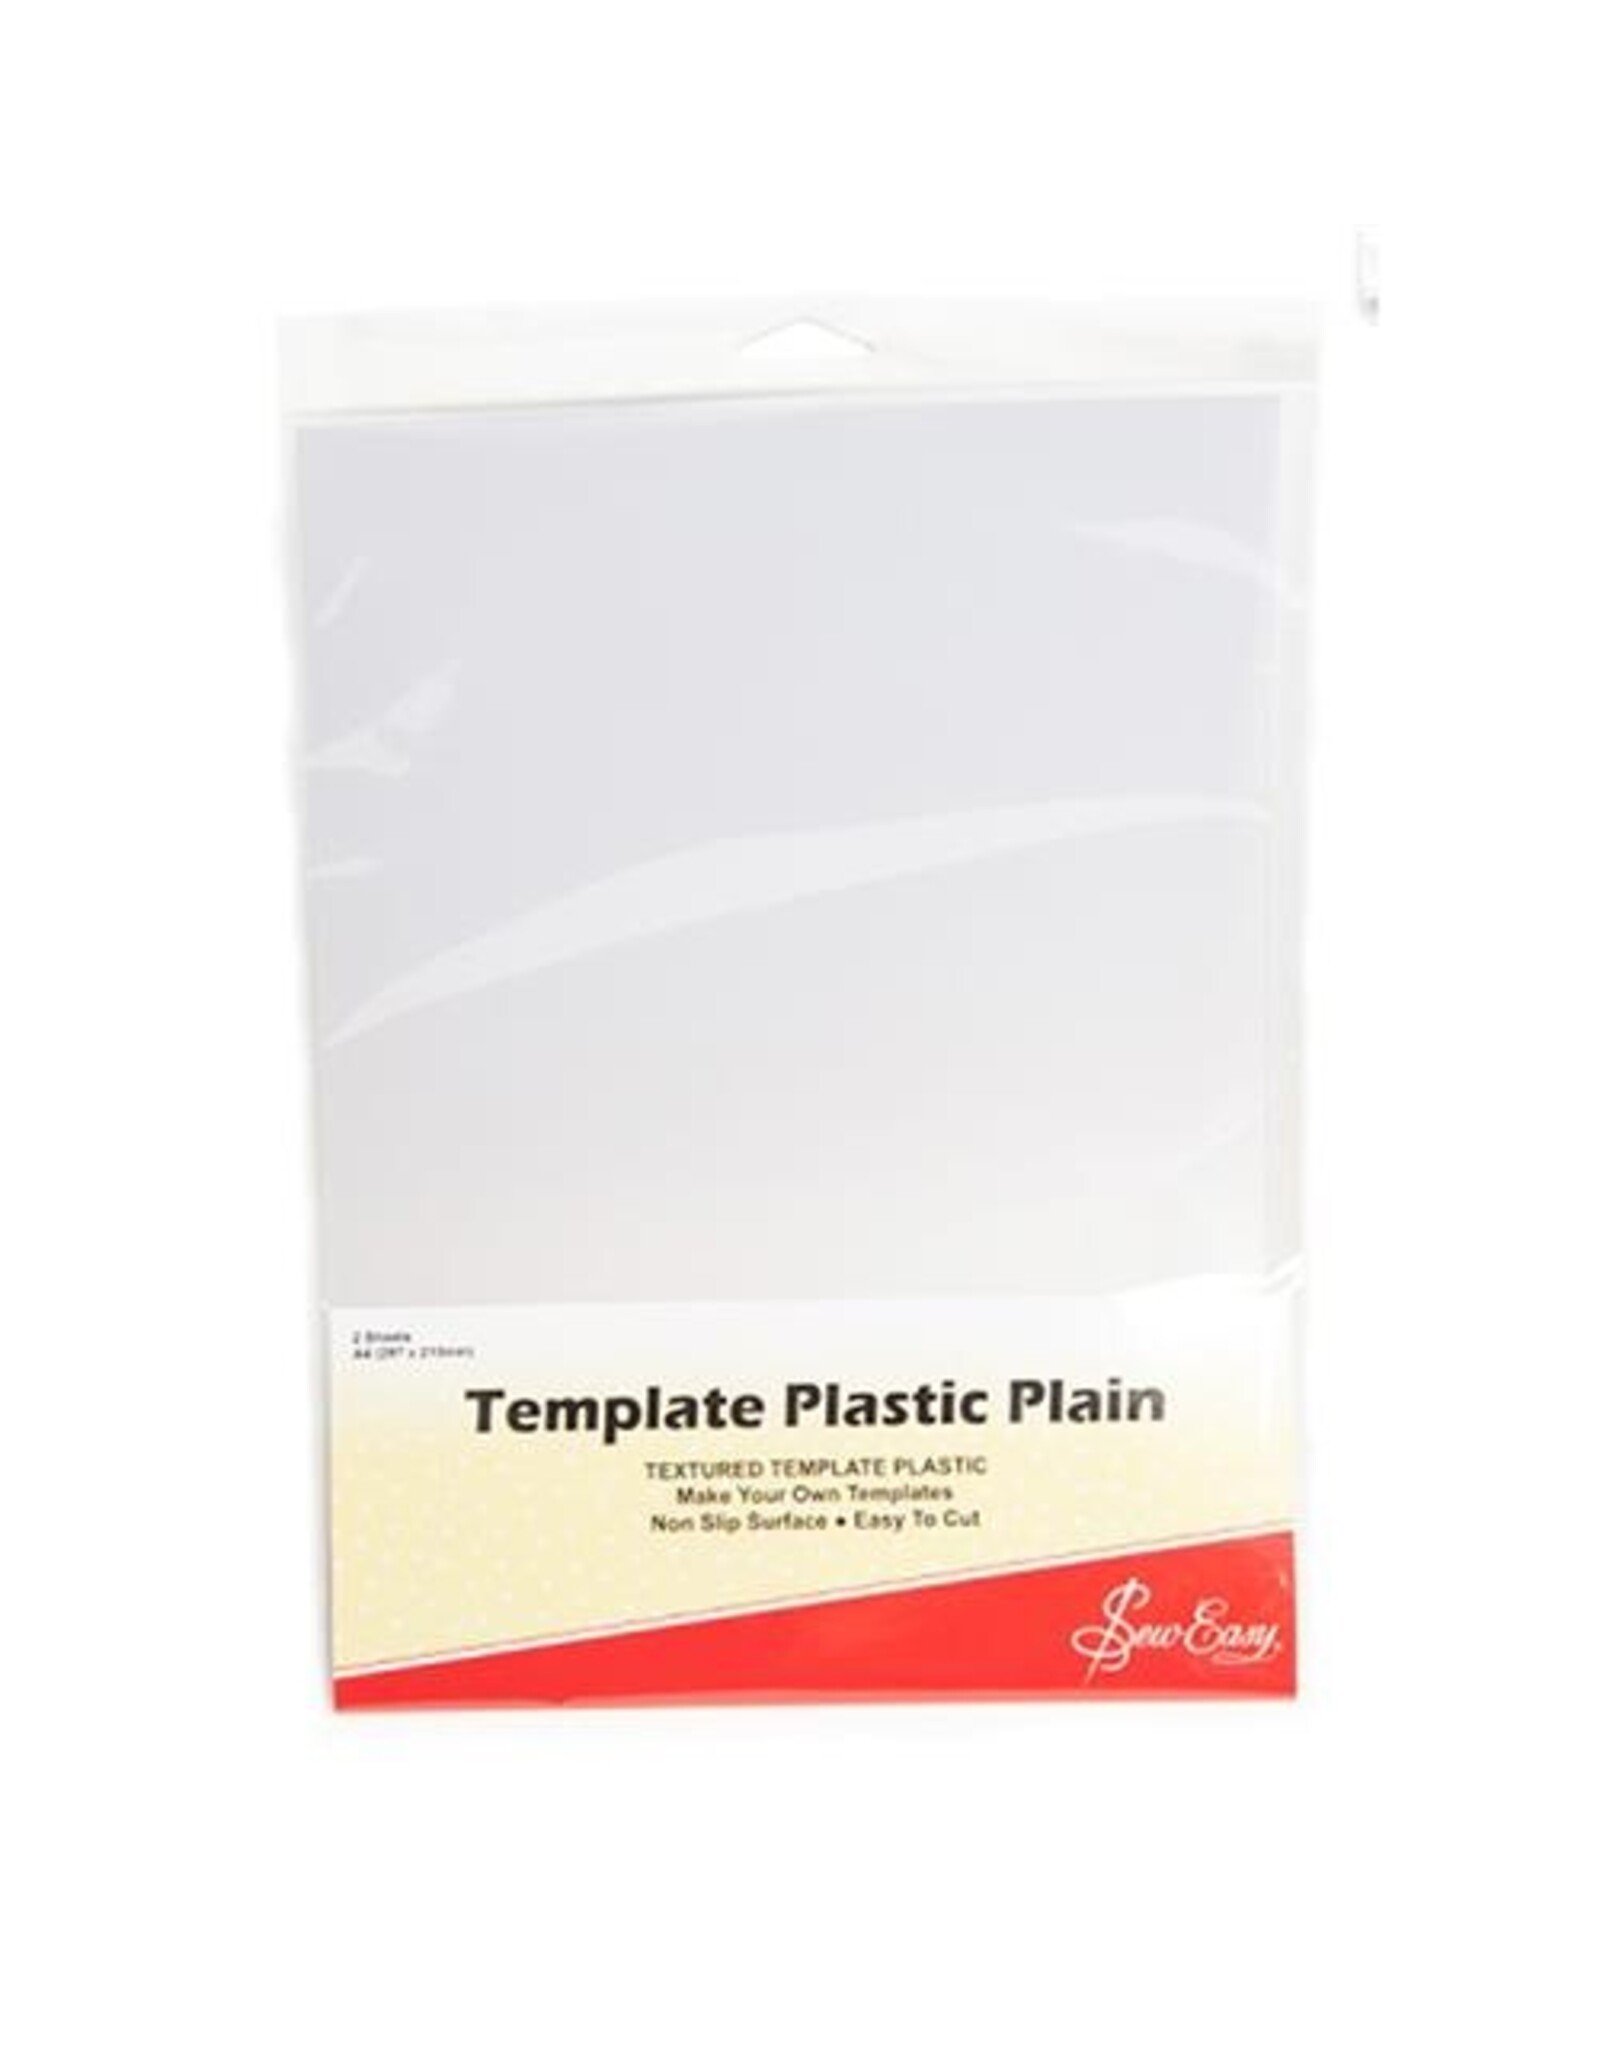 Sew Easy Template Plastic - A4 - 2 stuks